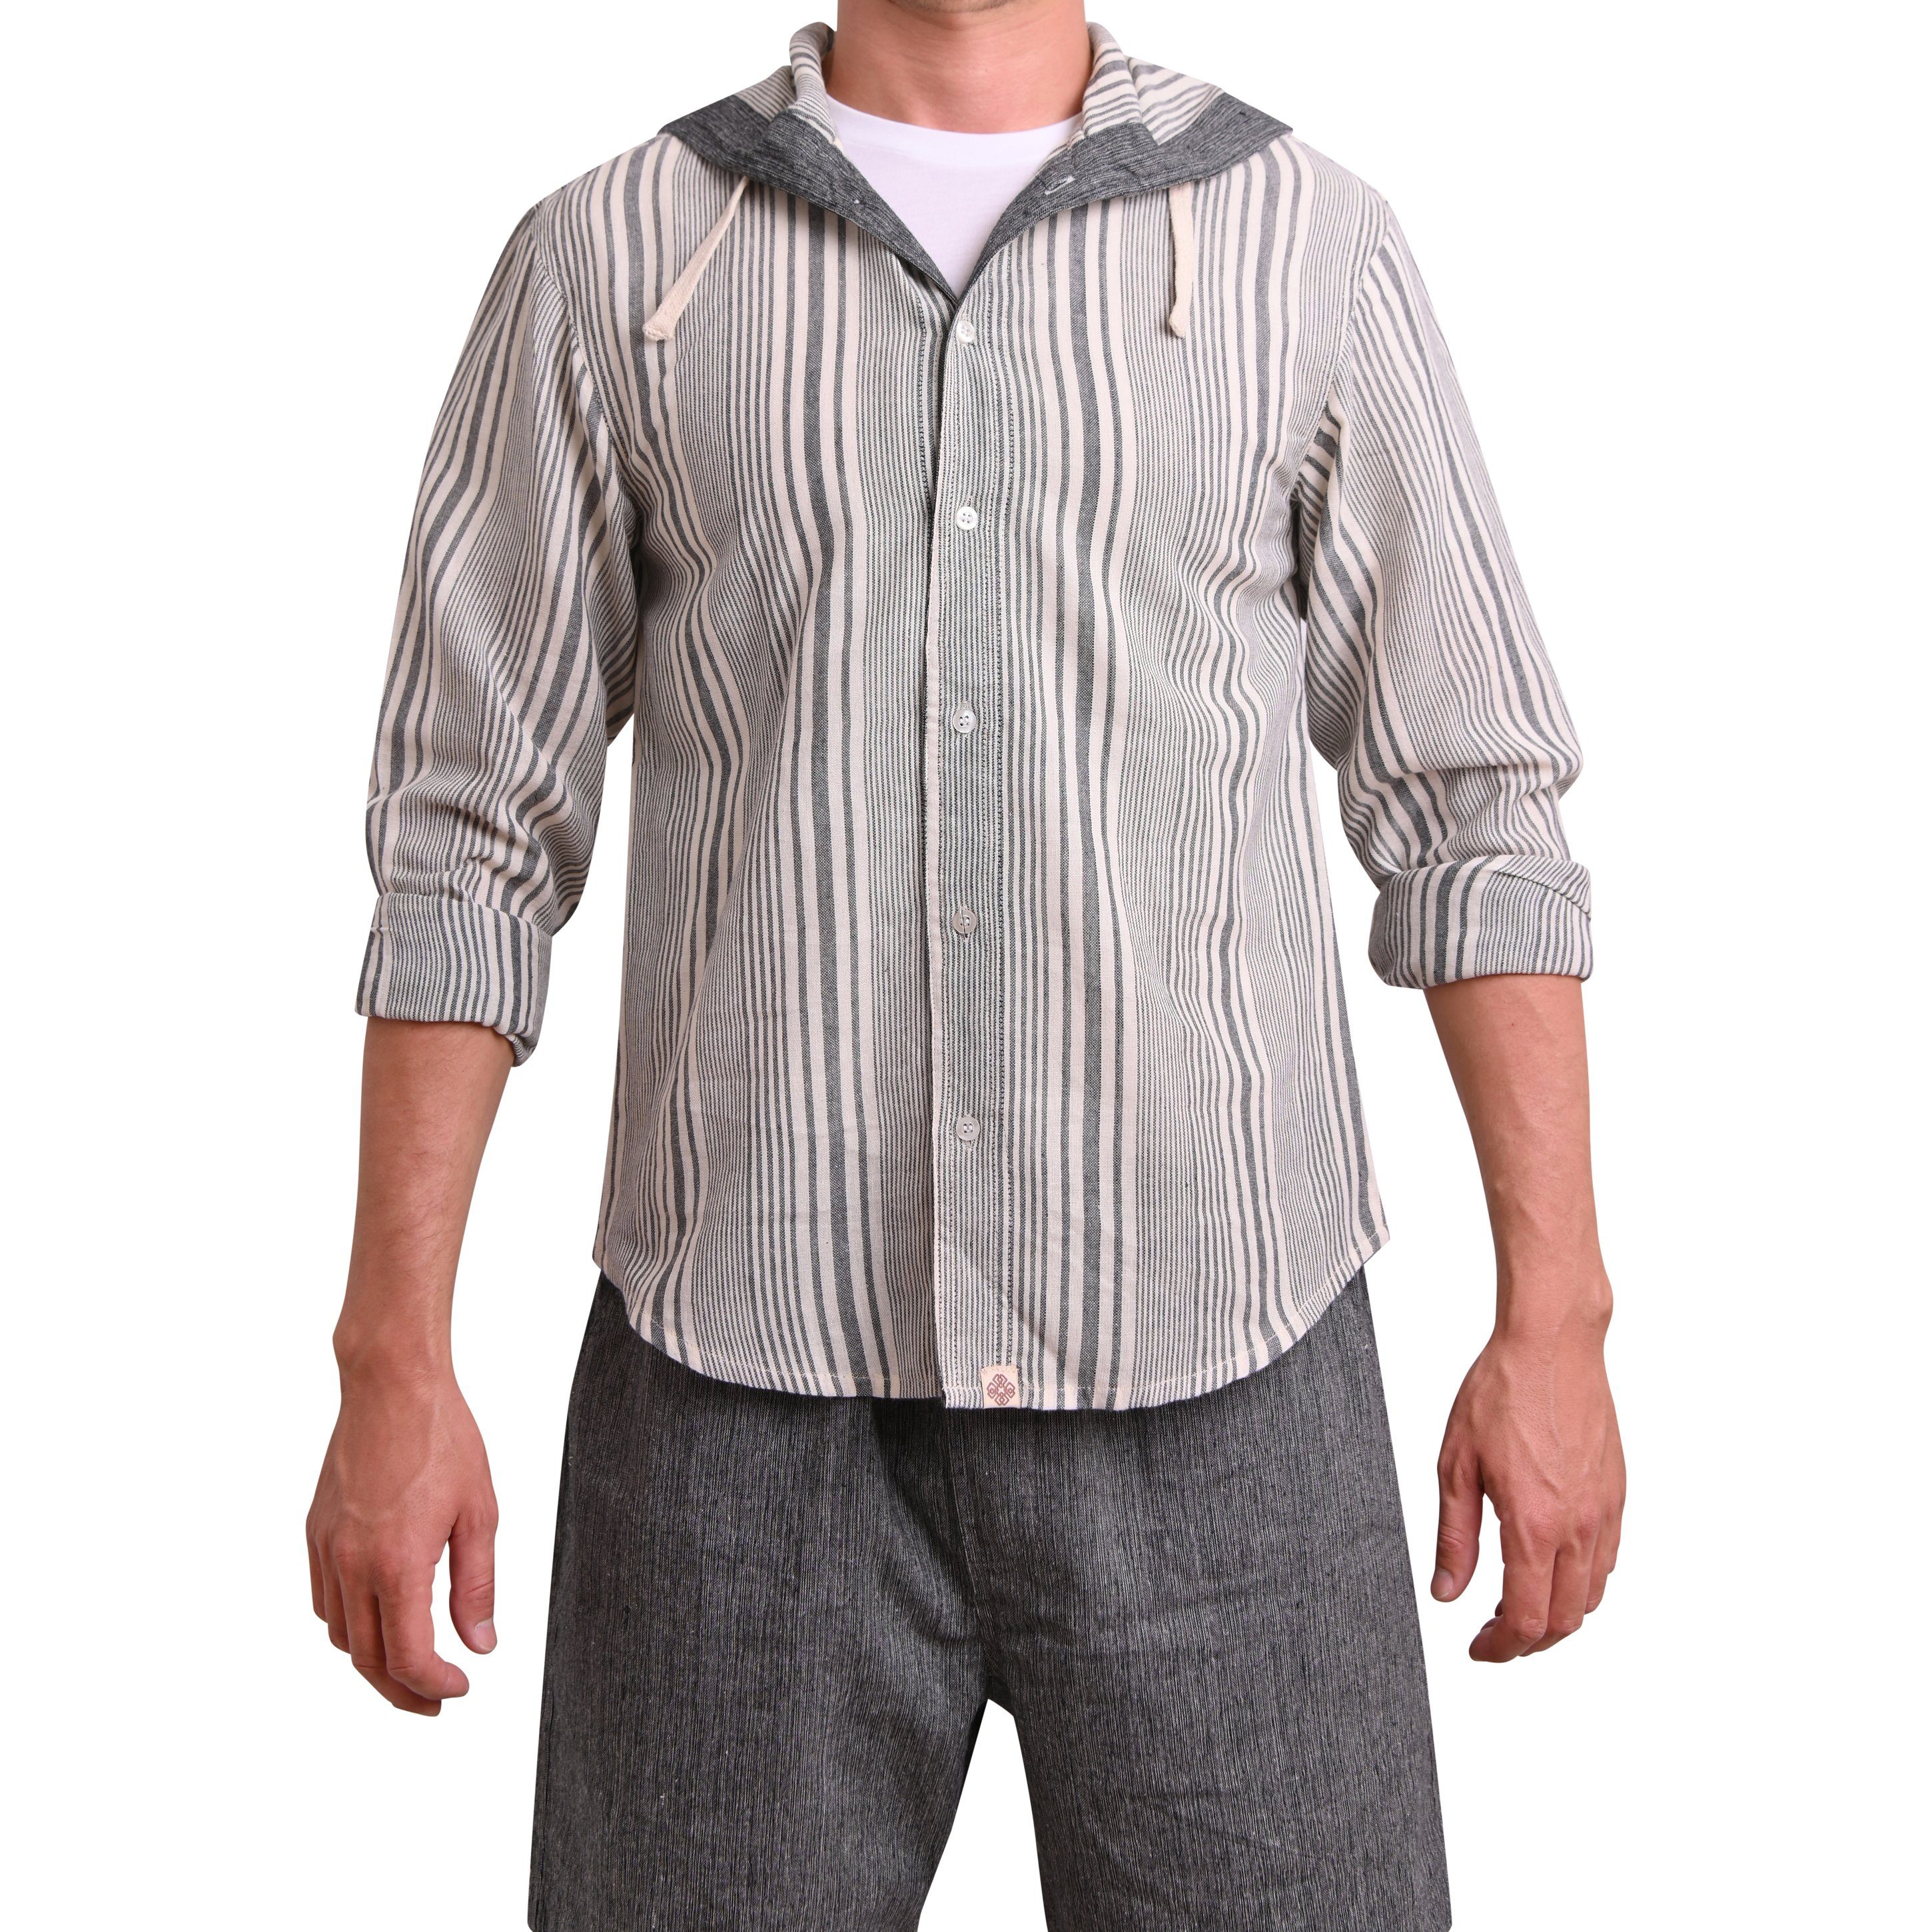 virblatt Kapuzenhemd Hippie Baumwolle, grau Sommerhemd größenverstellbar Herren Kapuze Kapuze Herren, Hemd